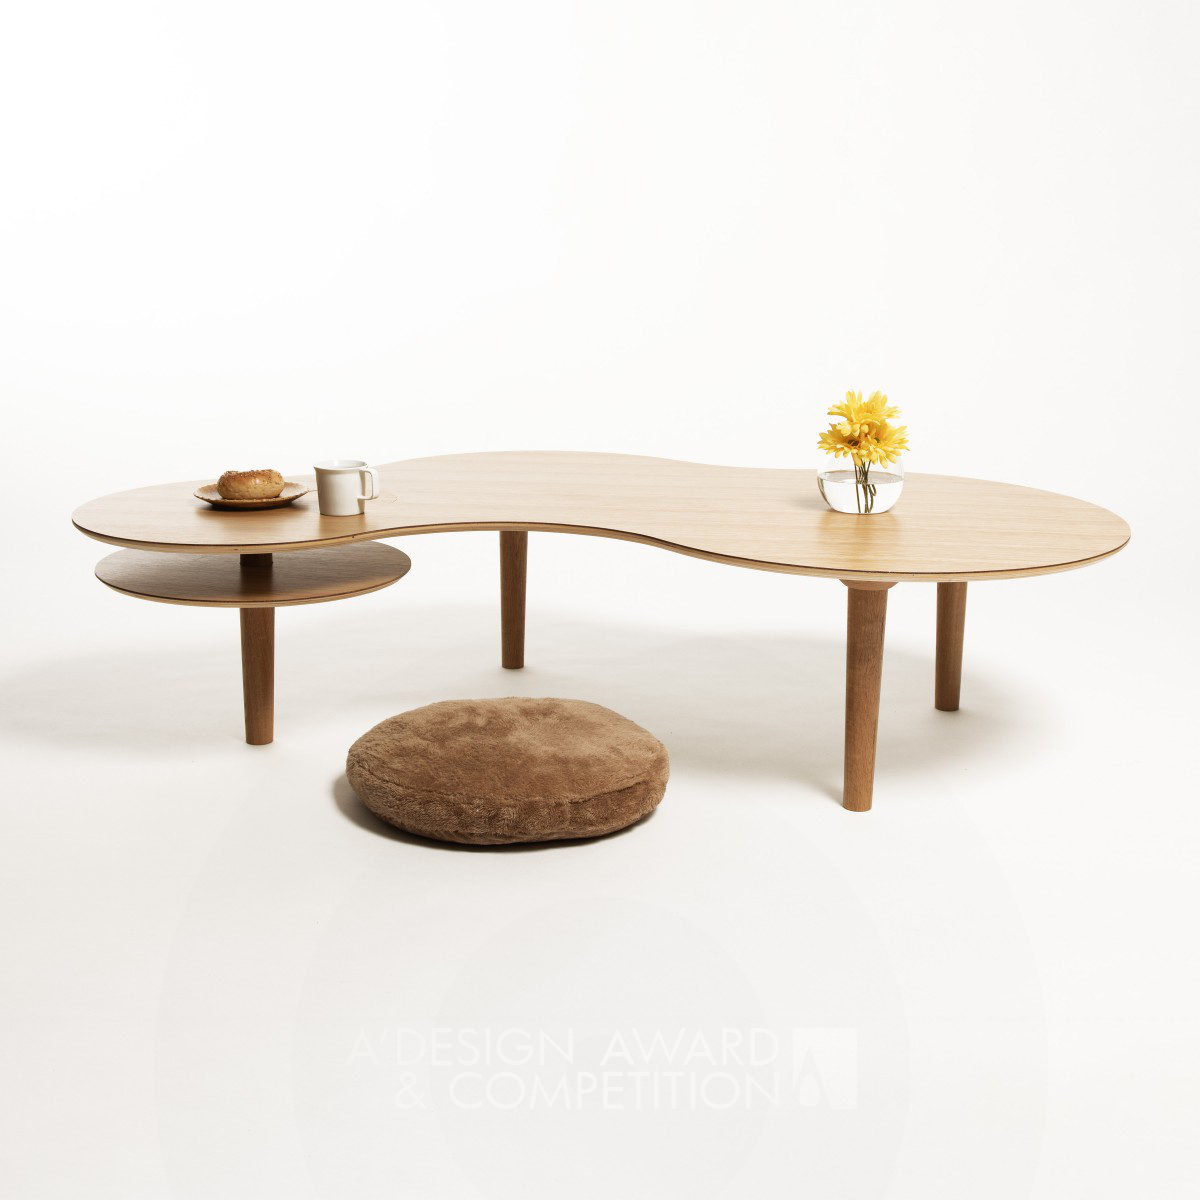 Misaki Kiyuna wins Iron at the prestigious A' Furniture Design Award with Palette Table Table.